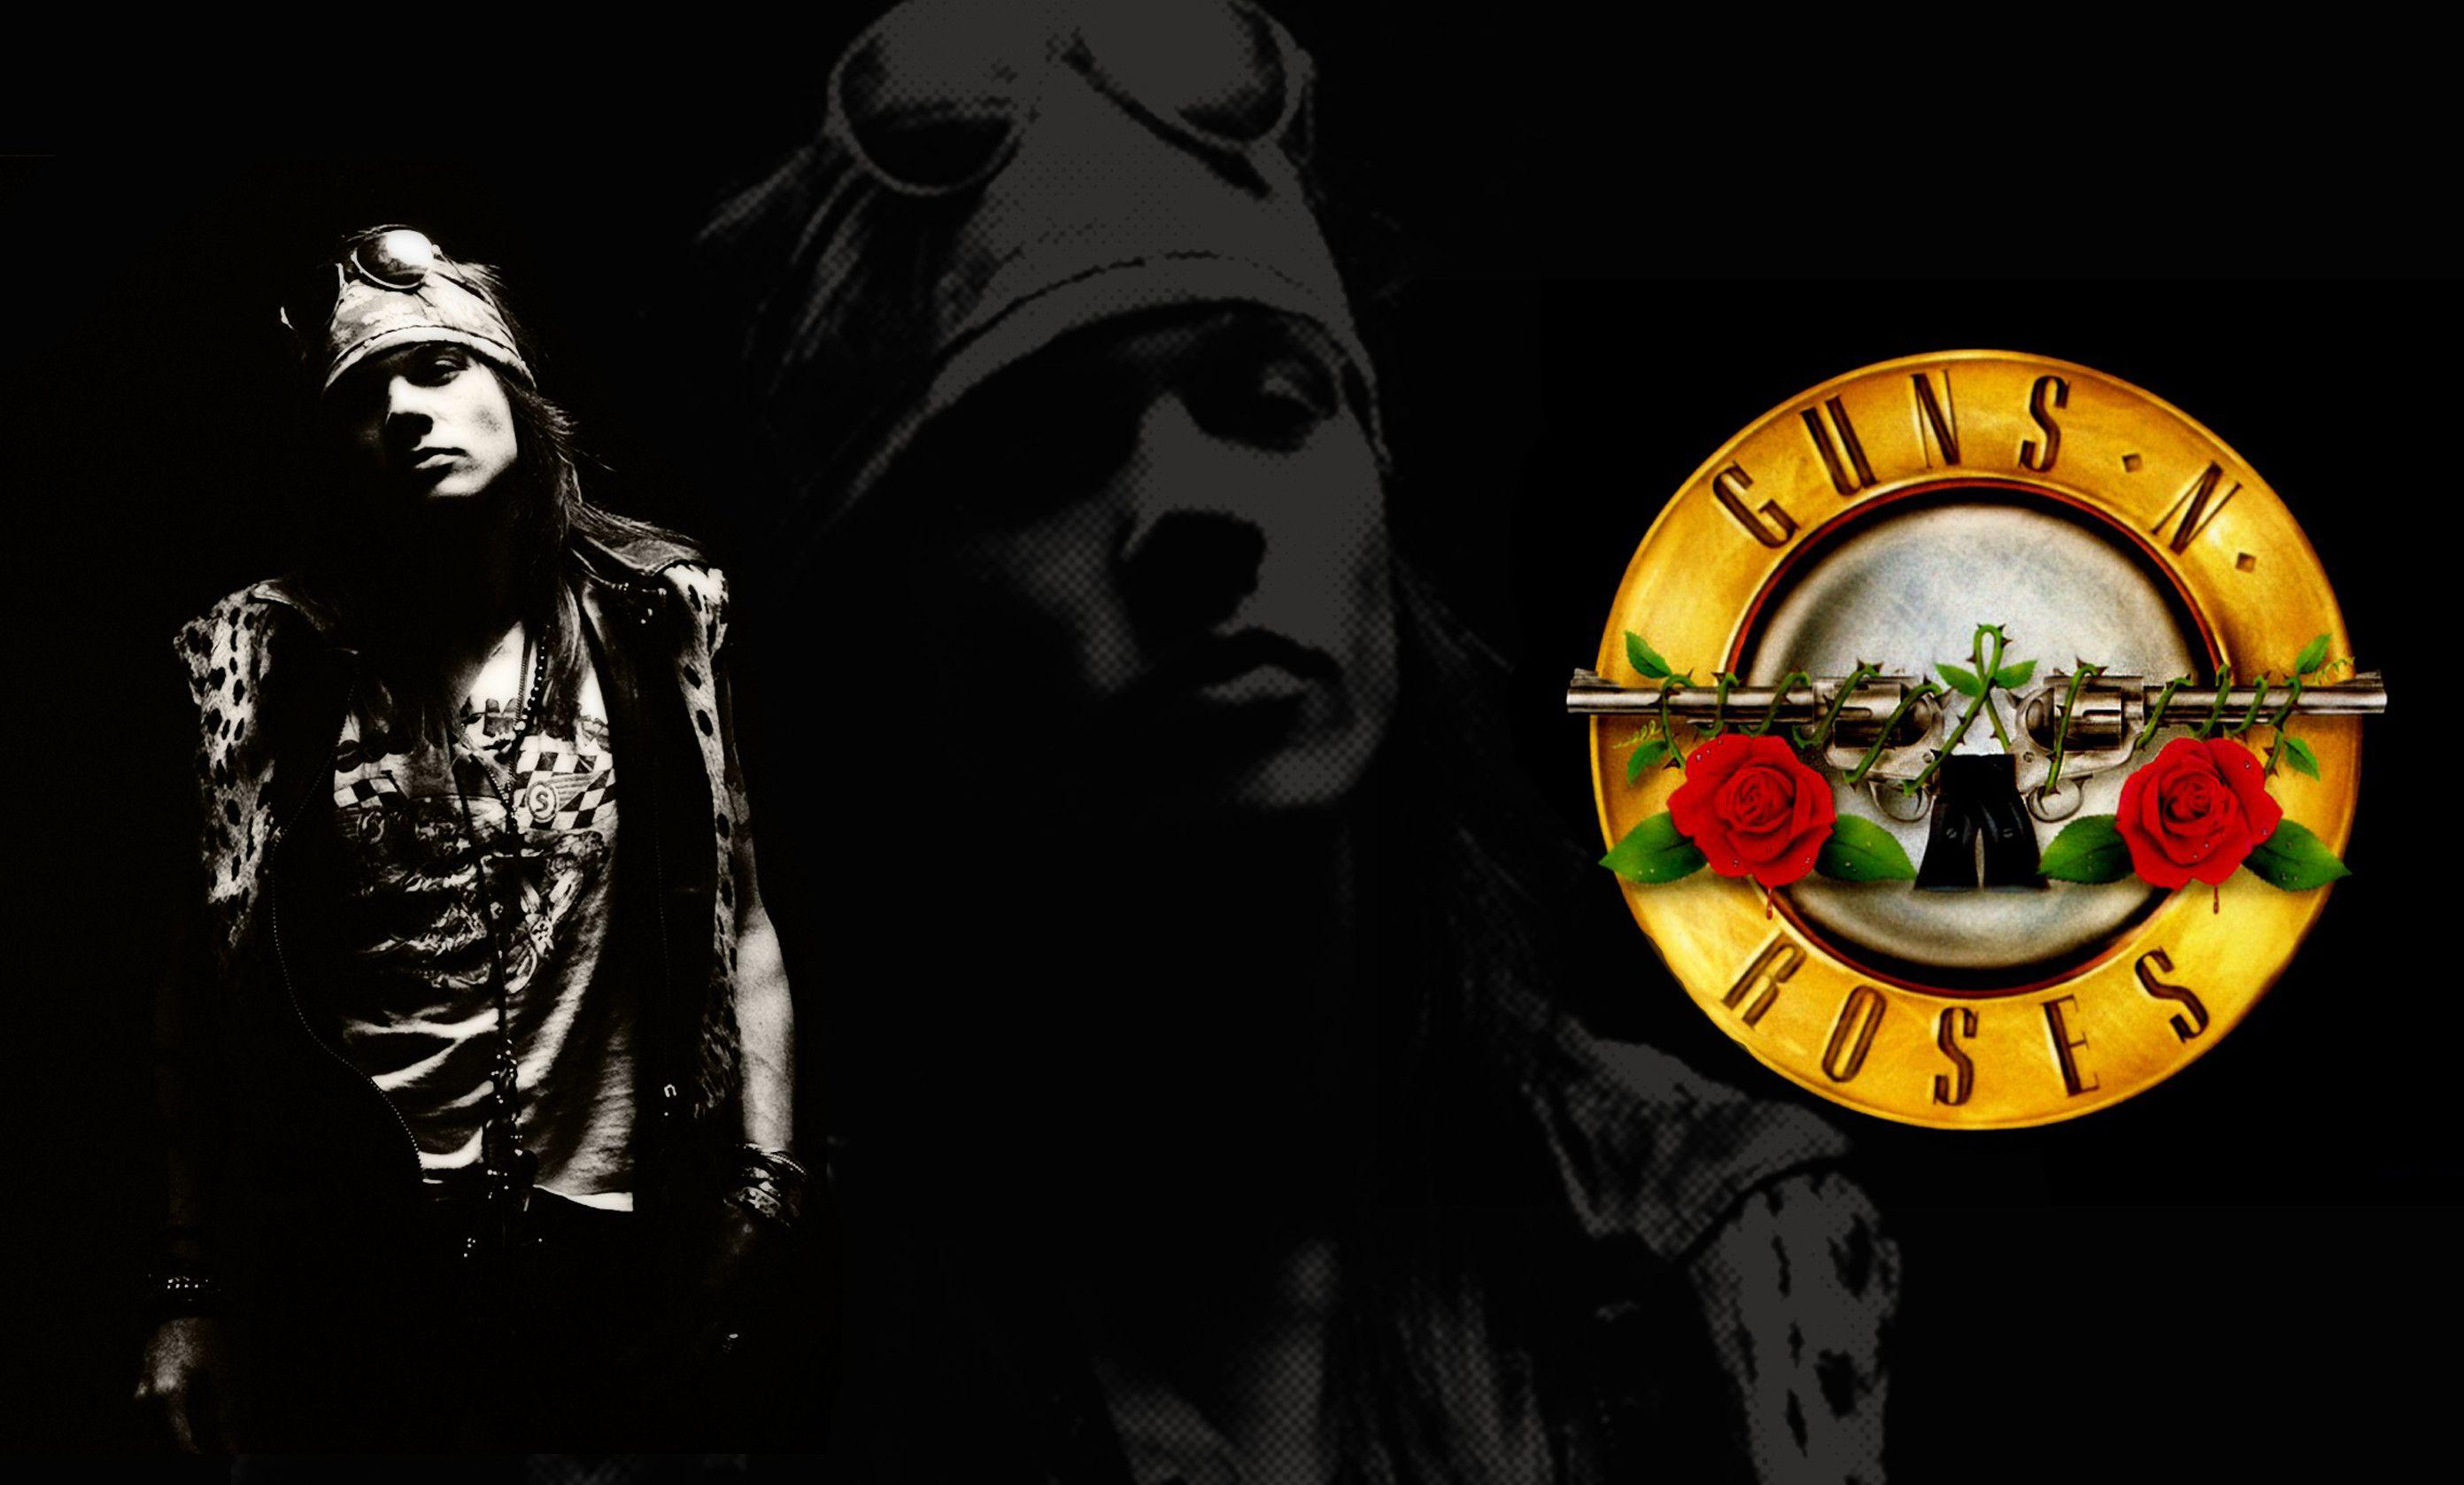 Slash Guns N Roses Wallpaper